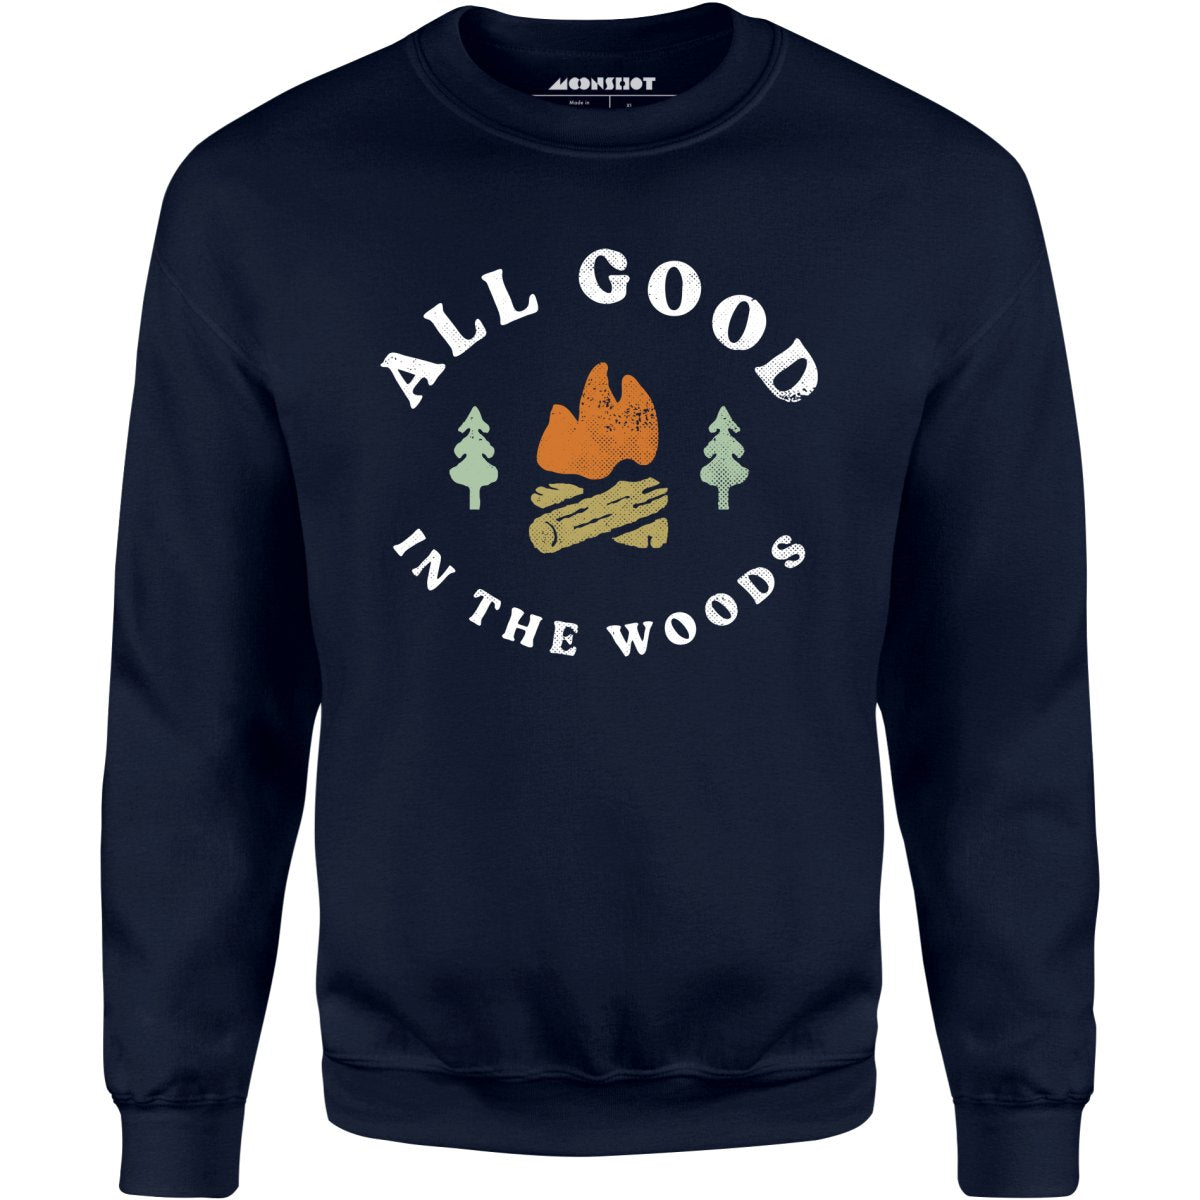 All Good in The Woods - Unisex Sweatshirt